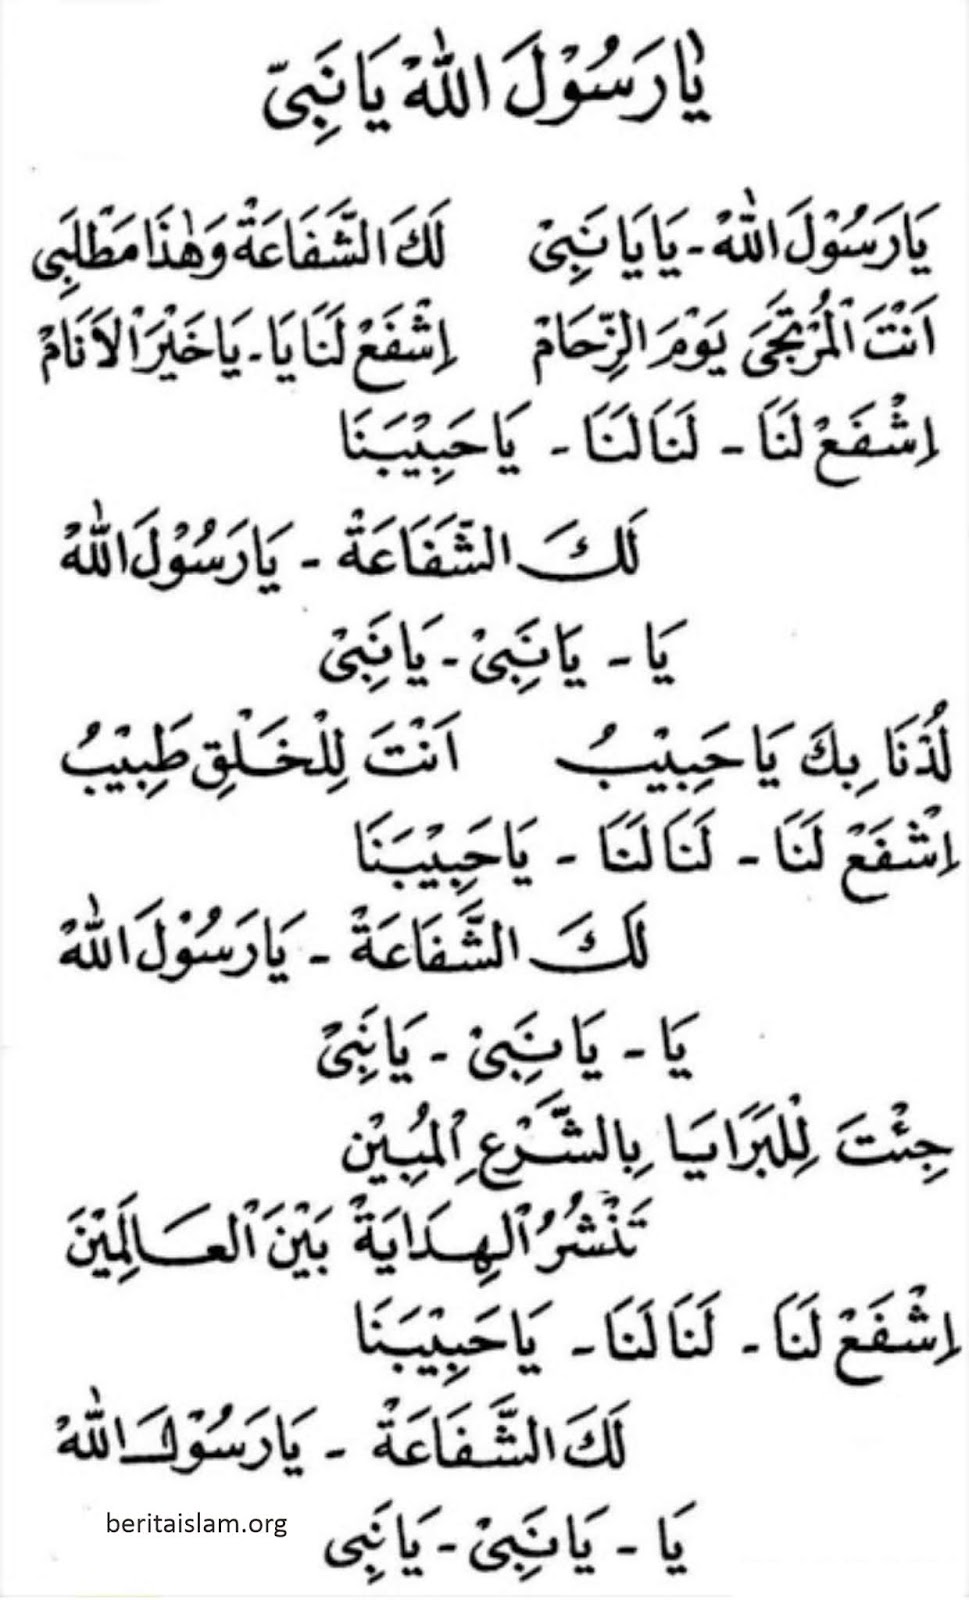 Lirik Sholawat Isyfa'lana (Yaa Rasulallah Yaa Nabi) Teks